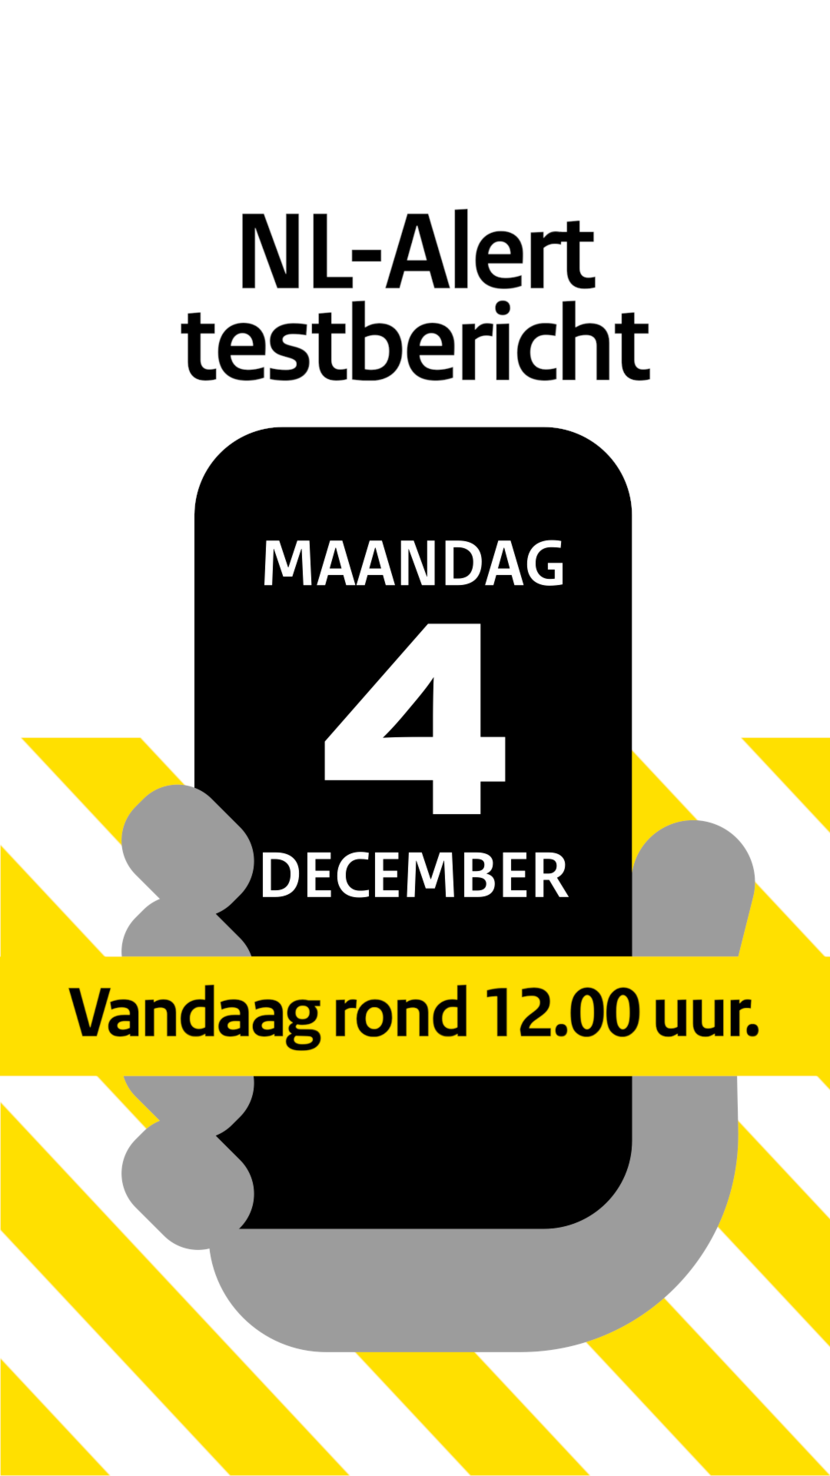 Aankondiging NL-Alert testbericht vandaag rond 12:00